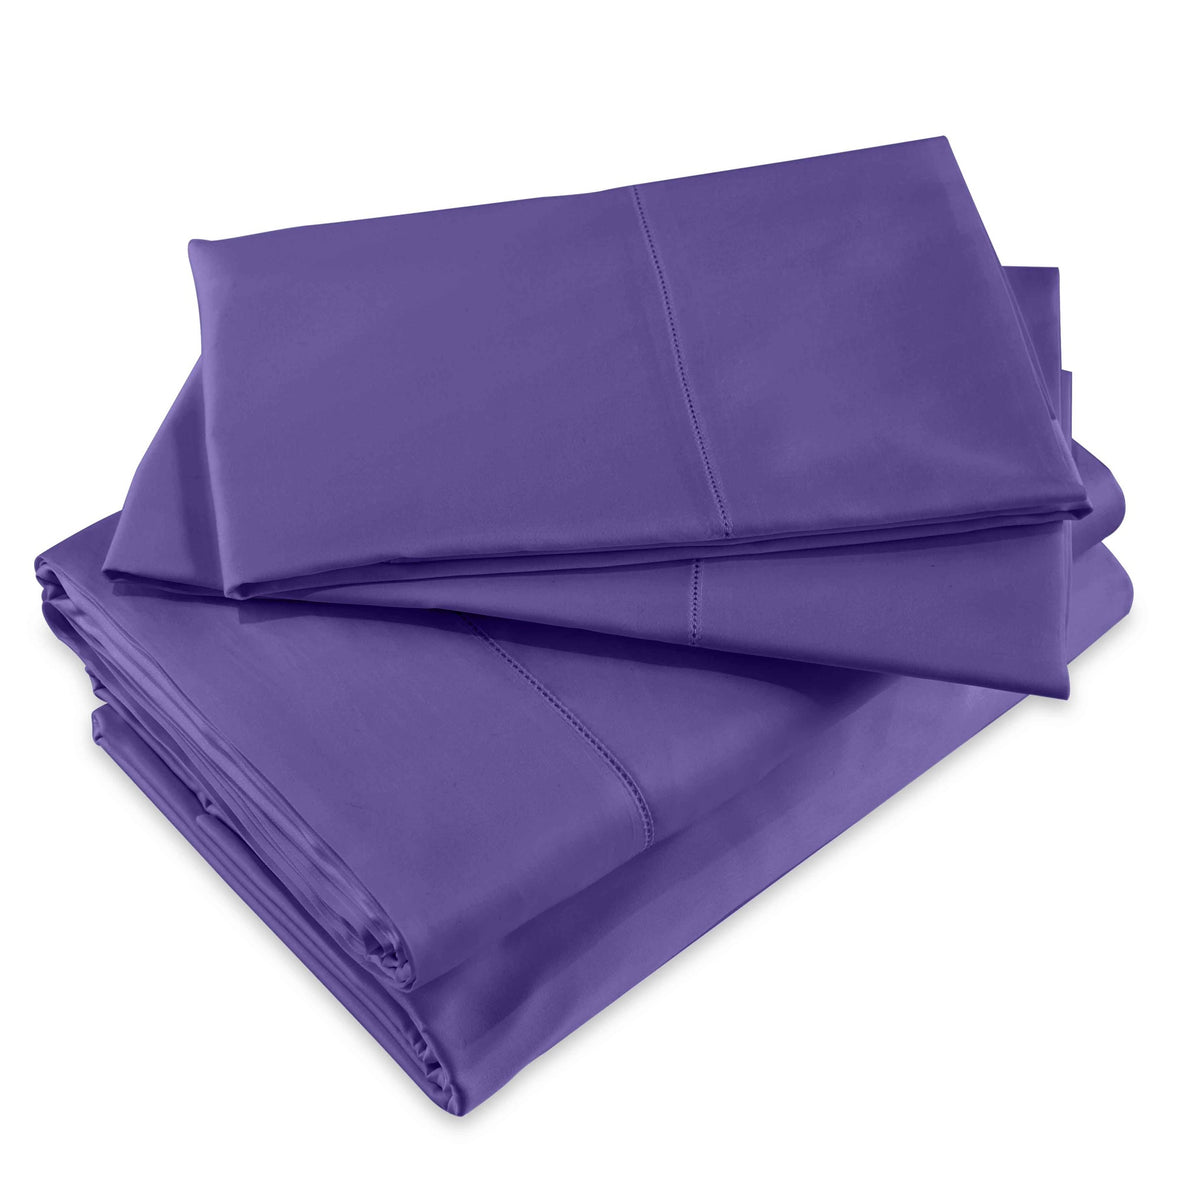 Clear Image of Signoria Raffaello Sheet Set in Violet Color